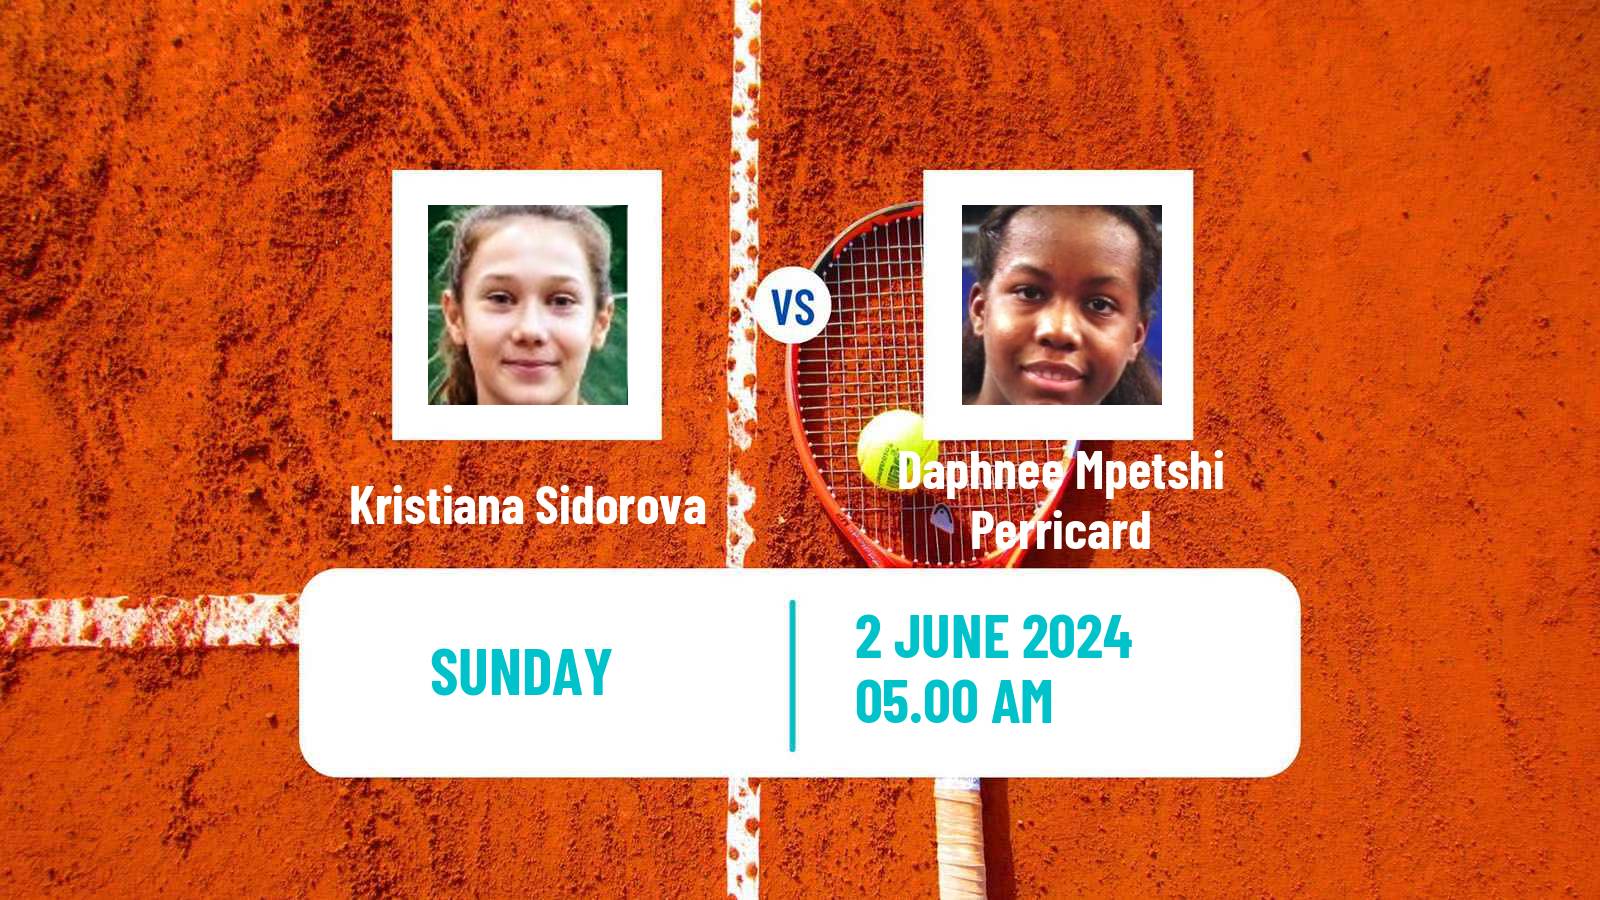 Tennis Girls Singles French Open Kristiana Sidorova - Daphnee Mpetshi Perricard